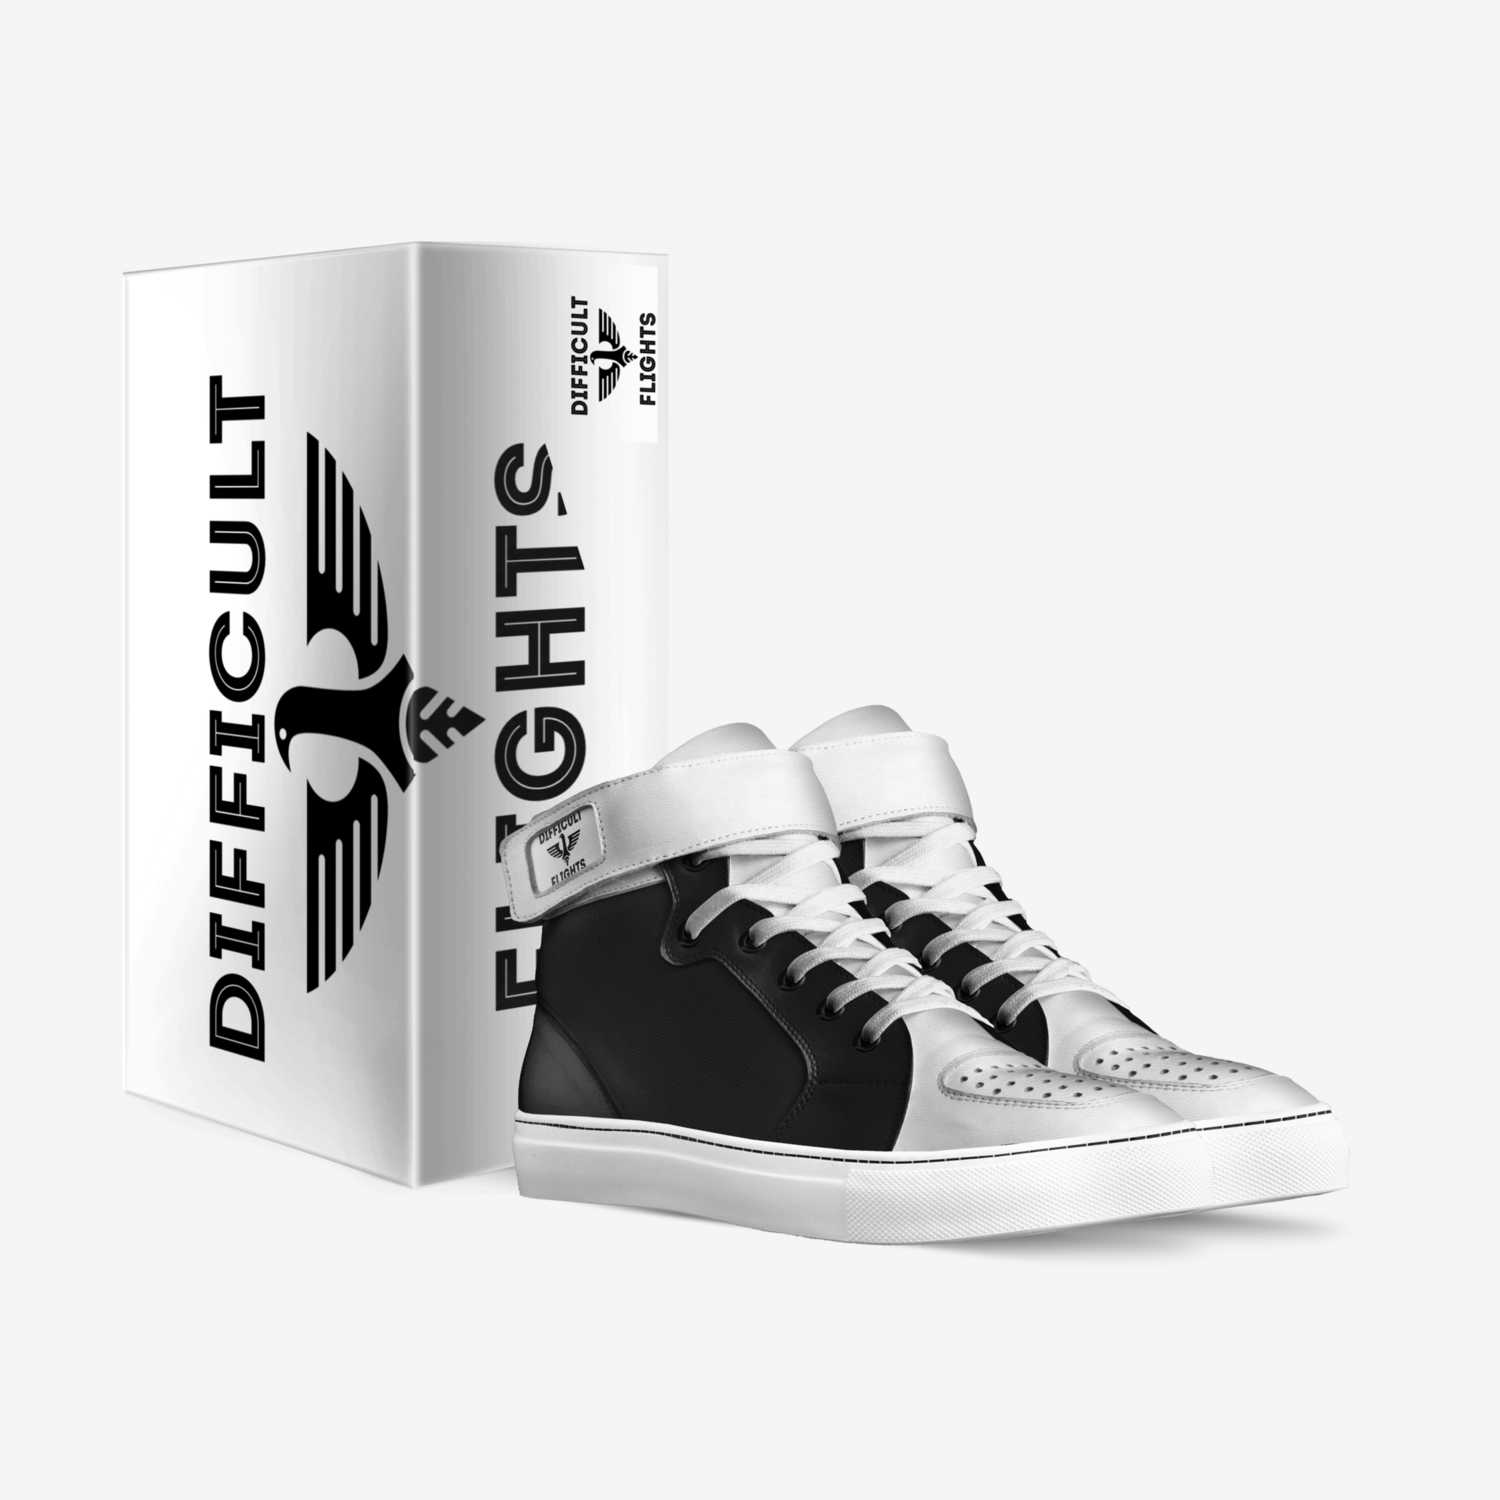 Flightz 4 custom made in Italy shoes by Cornelius Pascoe | Box view